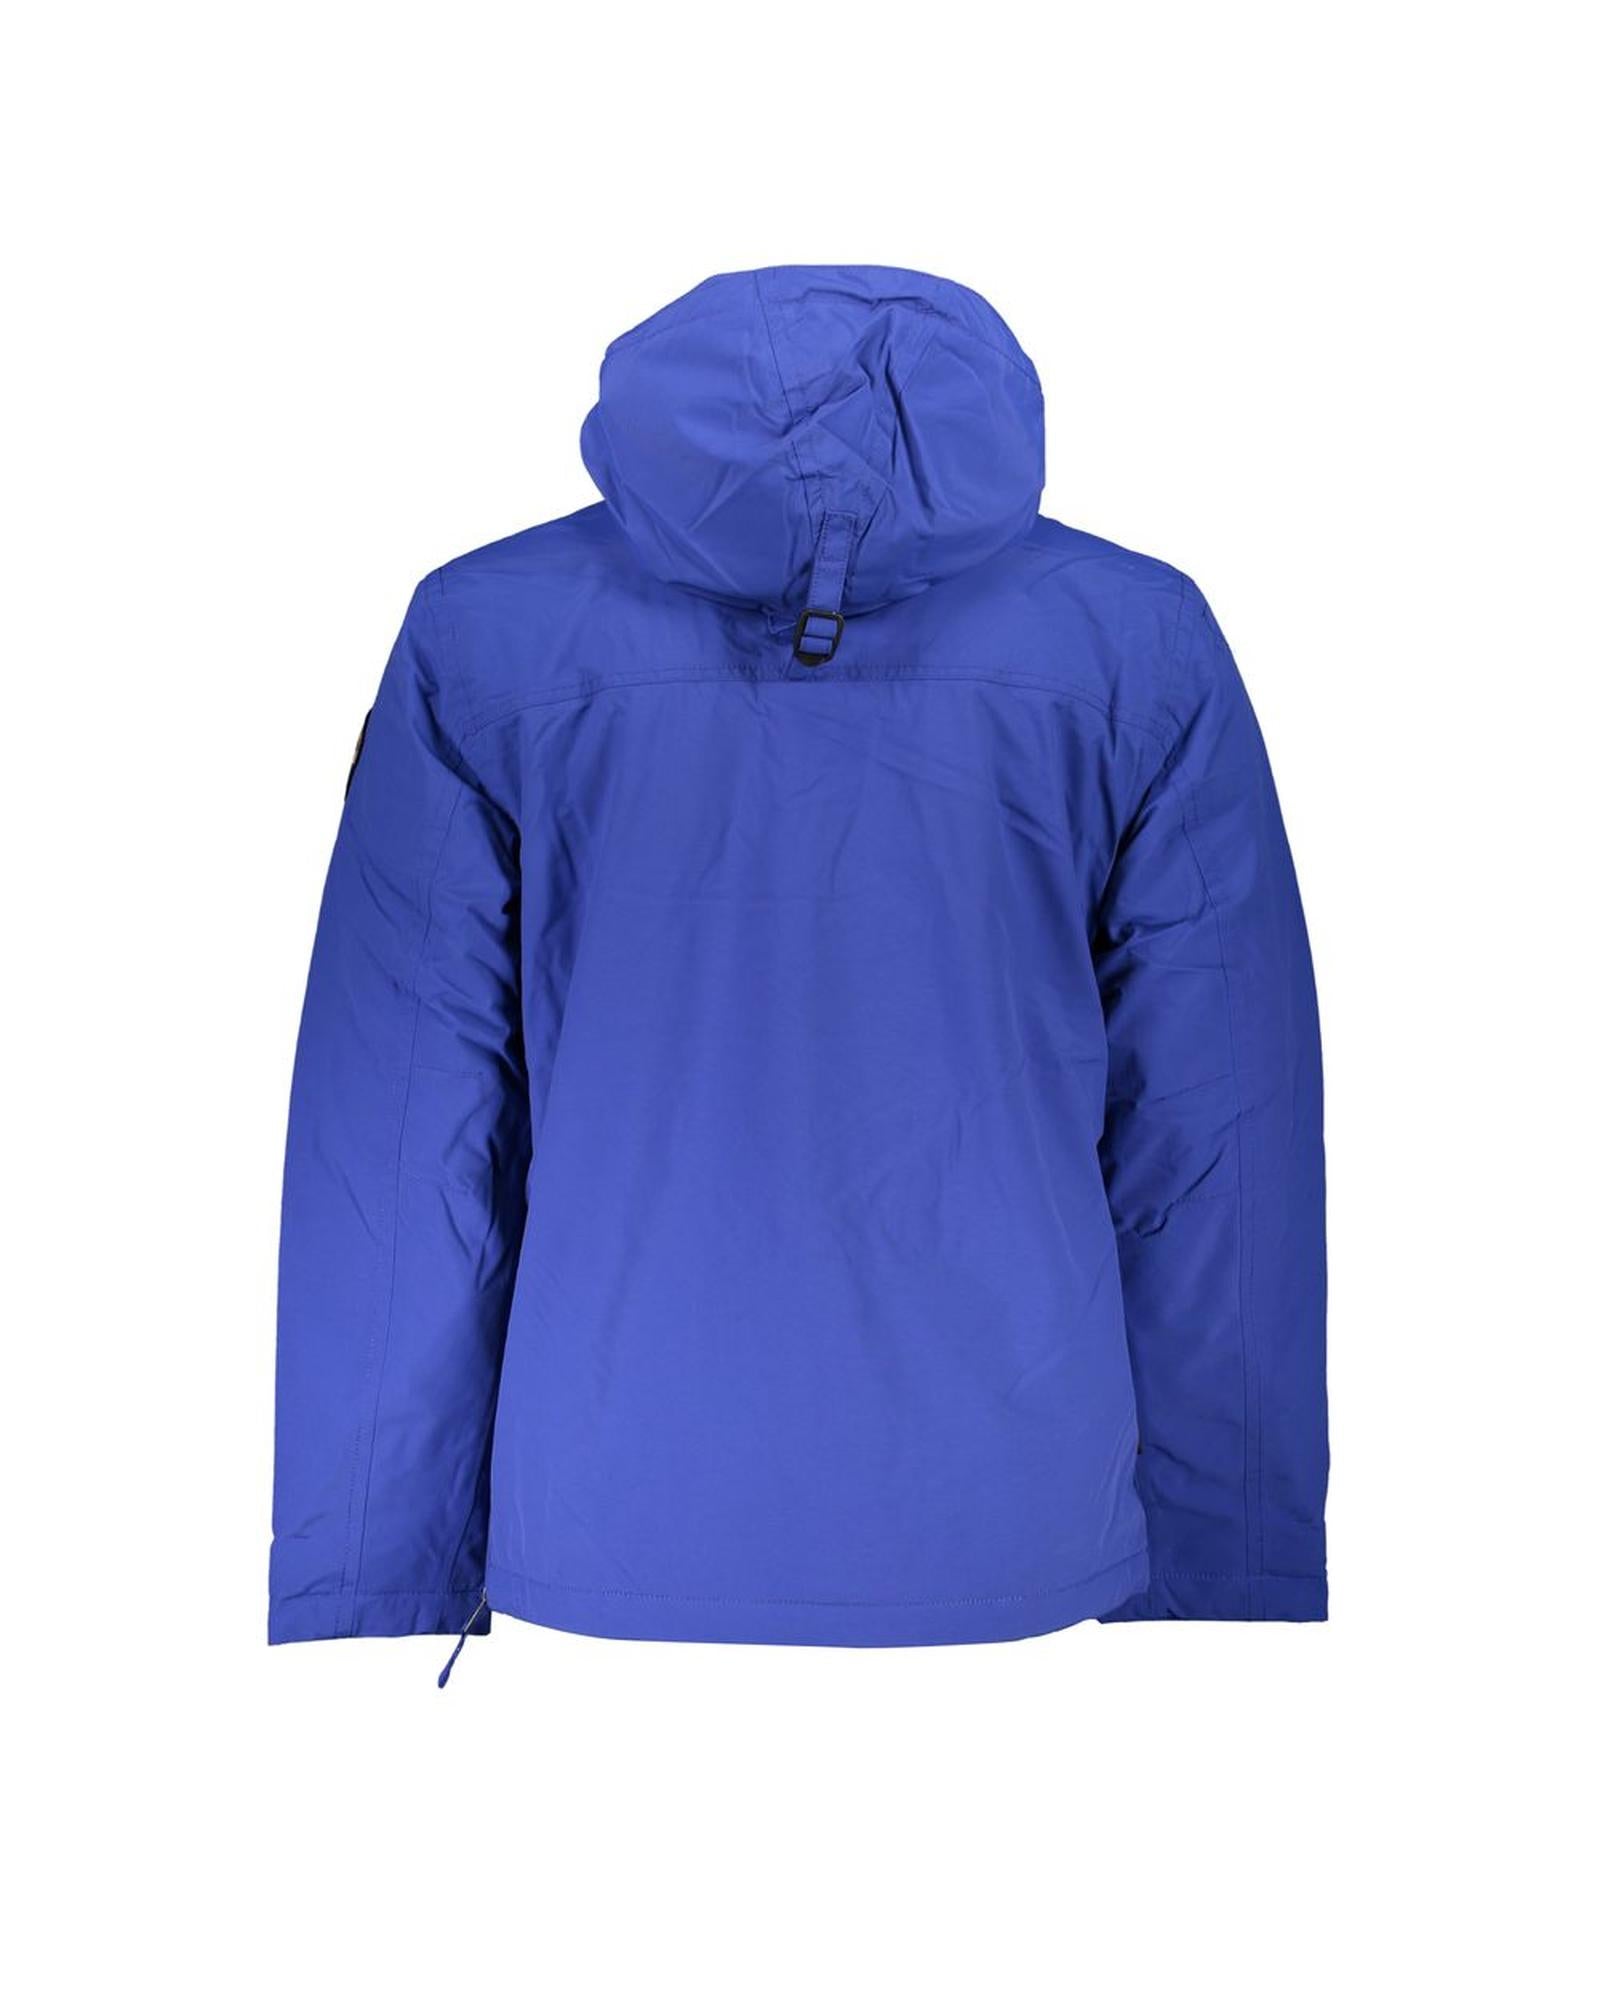 Men's Blue Polyamide Jacket - XL